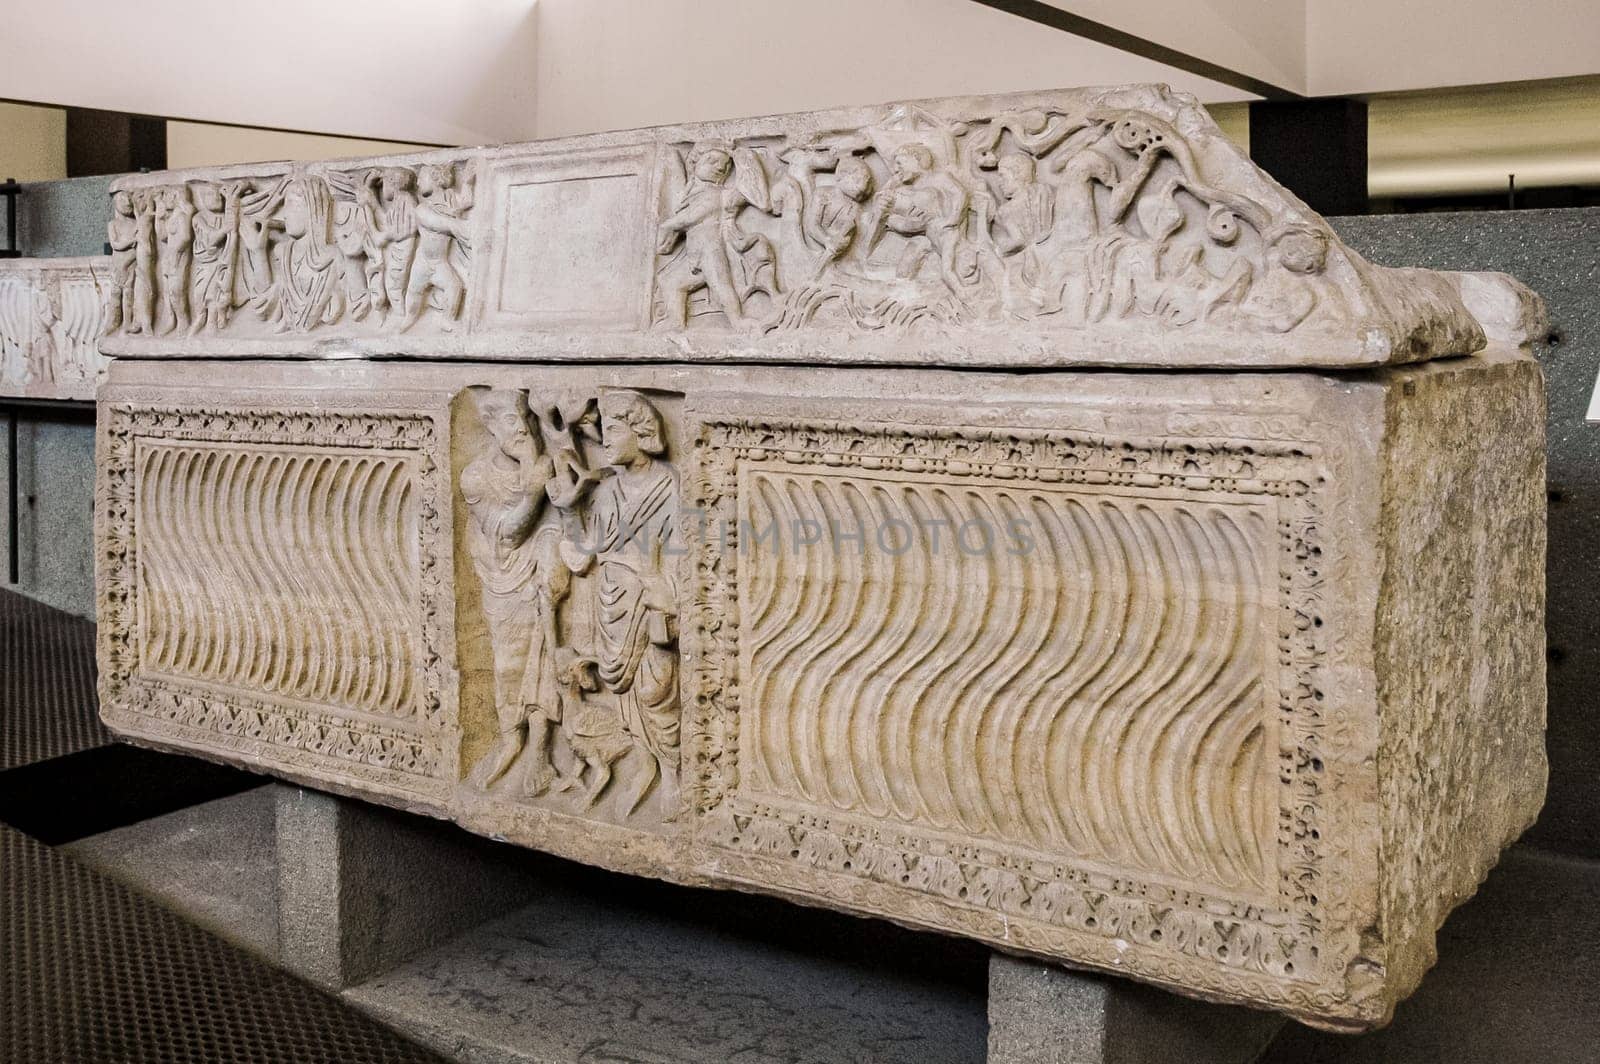 Vatican City, August 21, 2008: Strigilate sarcophagus by ivanmoreno